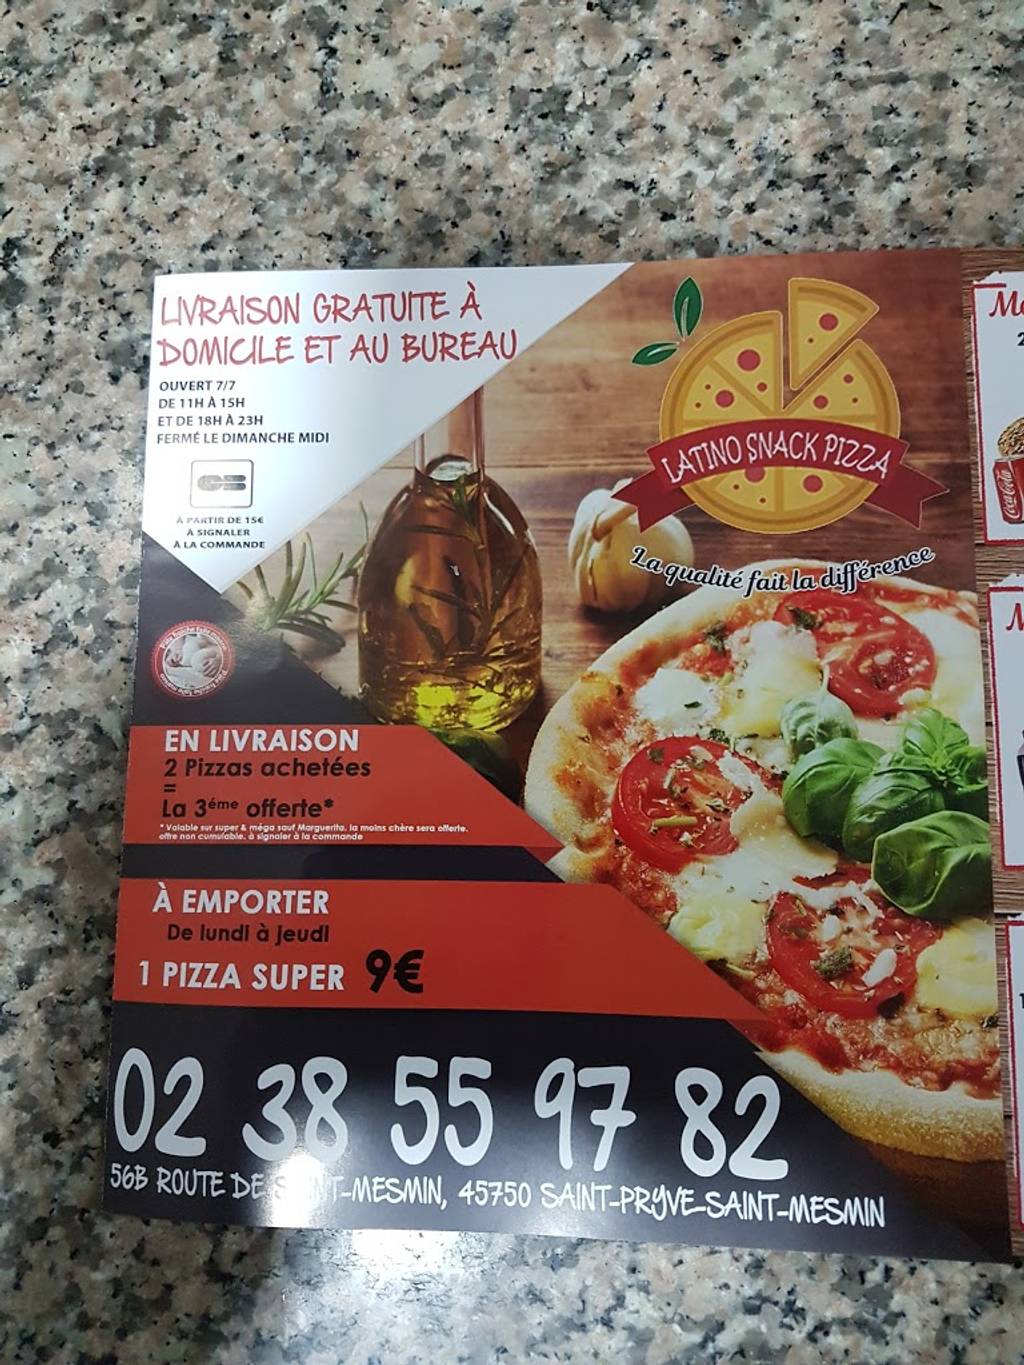 Latino Snack Pizza Pizza Saint-Pryvé-Saint-Mesmin - Food Dish Cuisine Fast food Ingredient